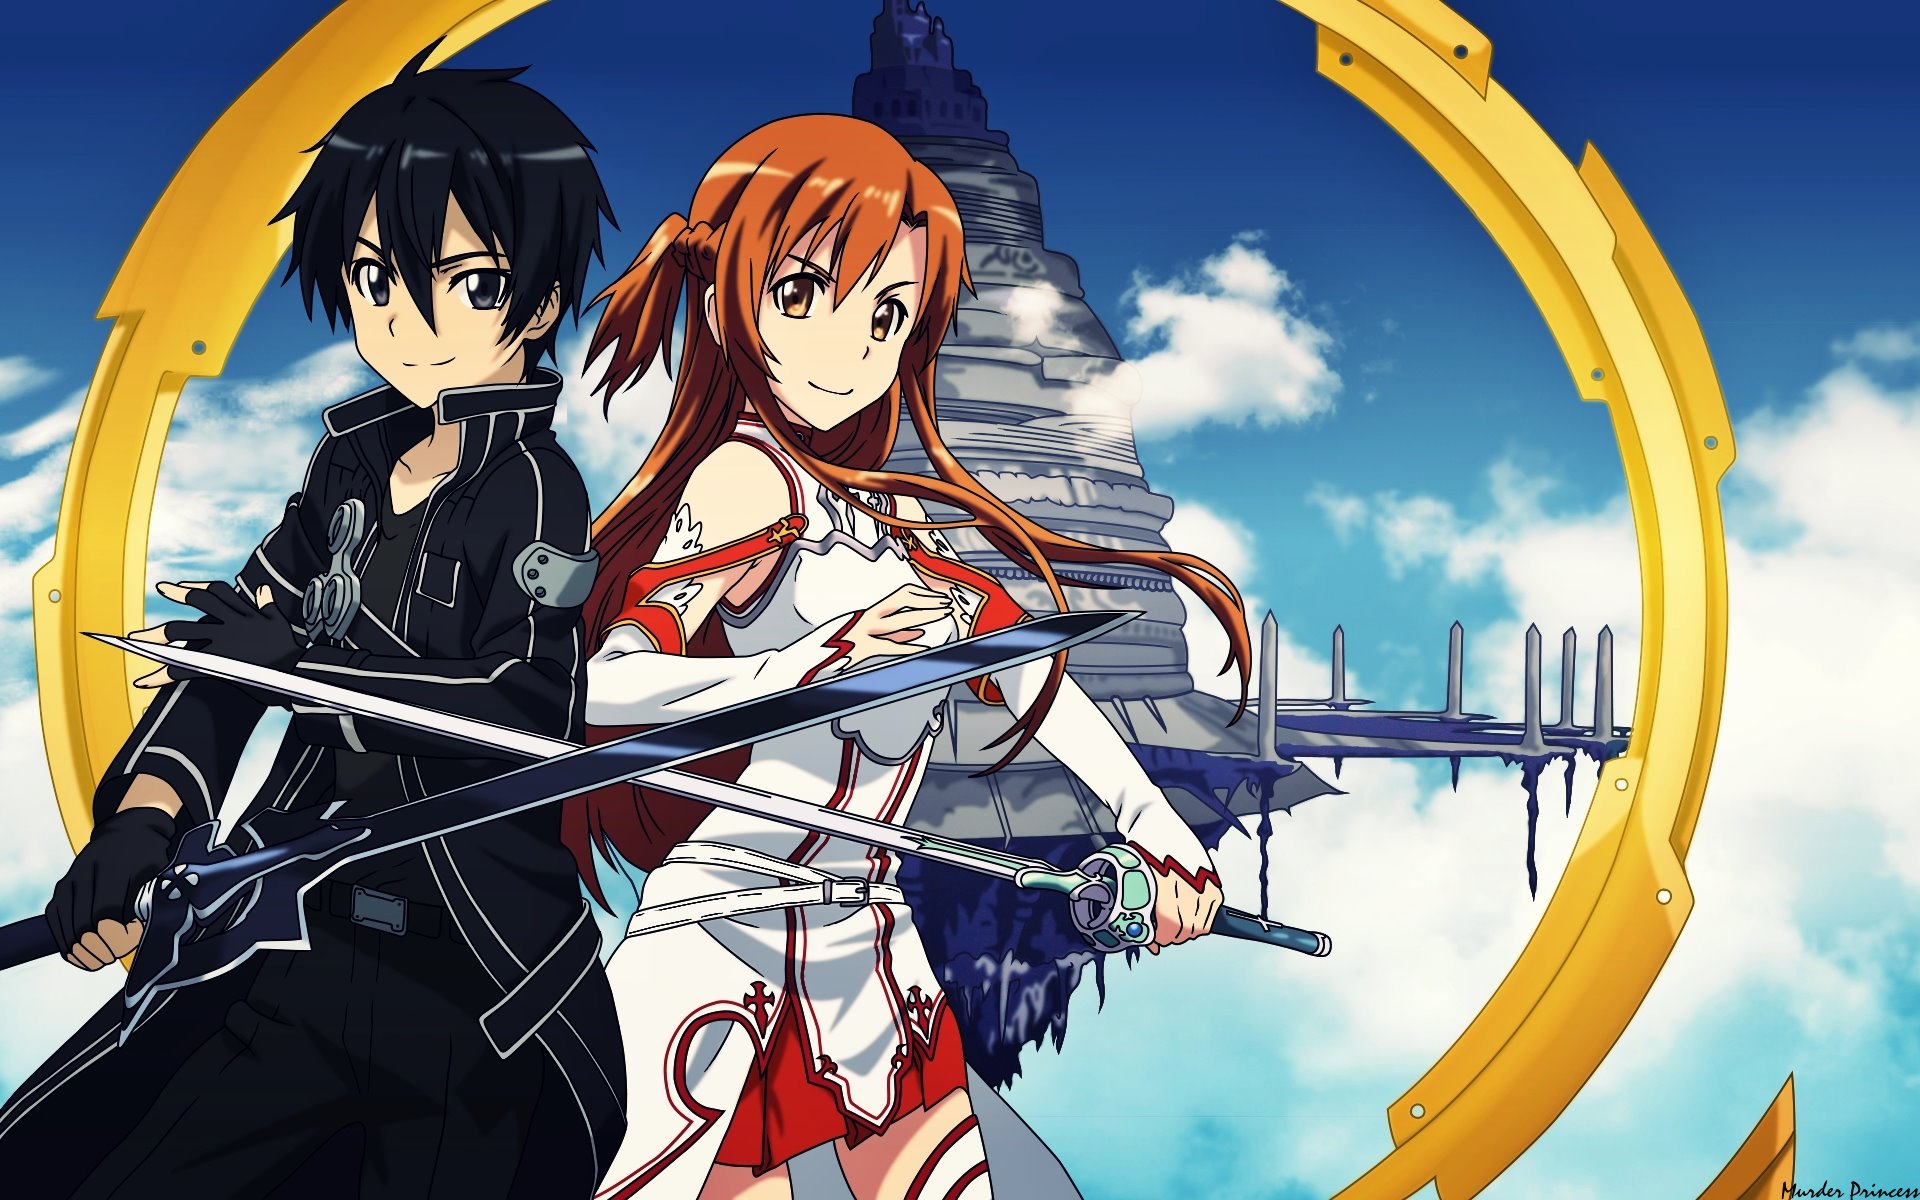 Anime of the Week: Sword Art Online